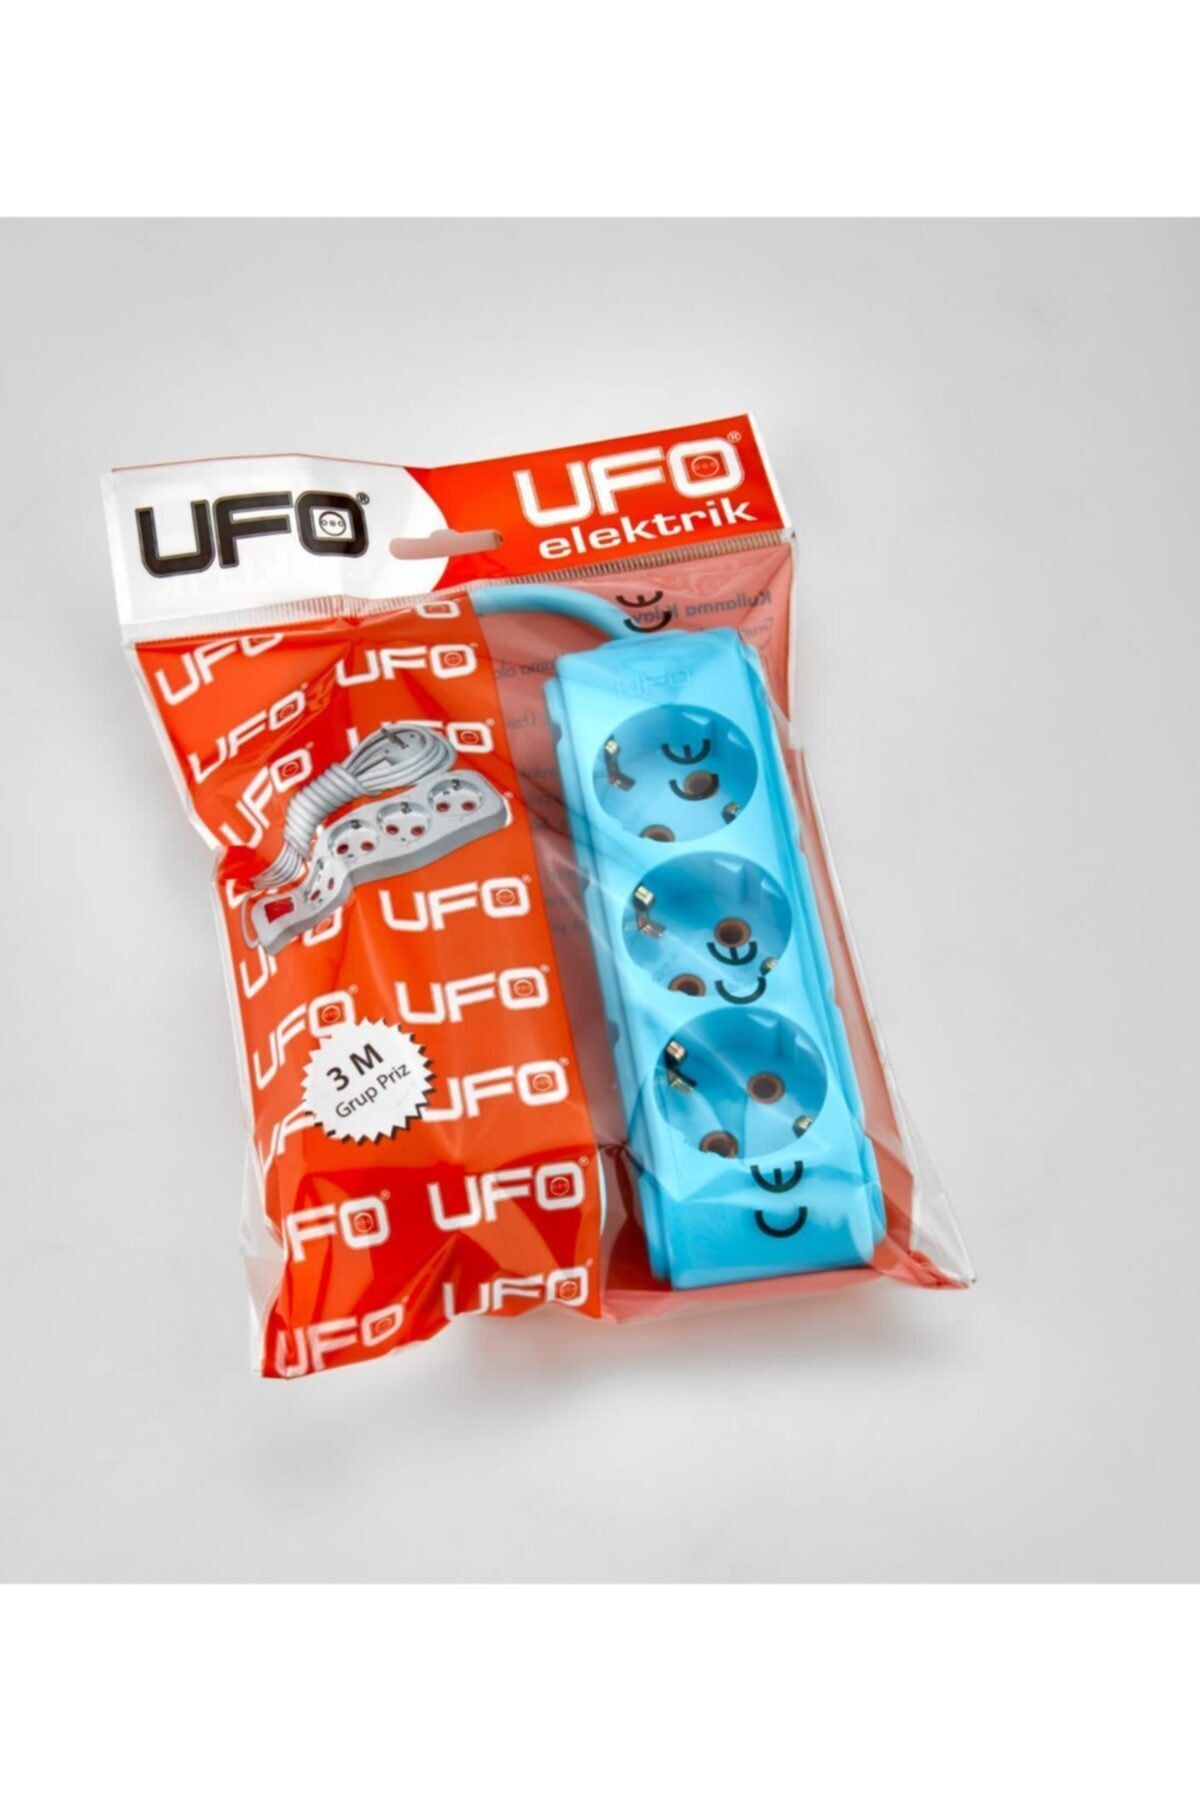 UFO Elektrik Mavi Renkli Üçlü Topraklı Kablolu Topraklı Priz 3 Metre